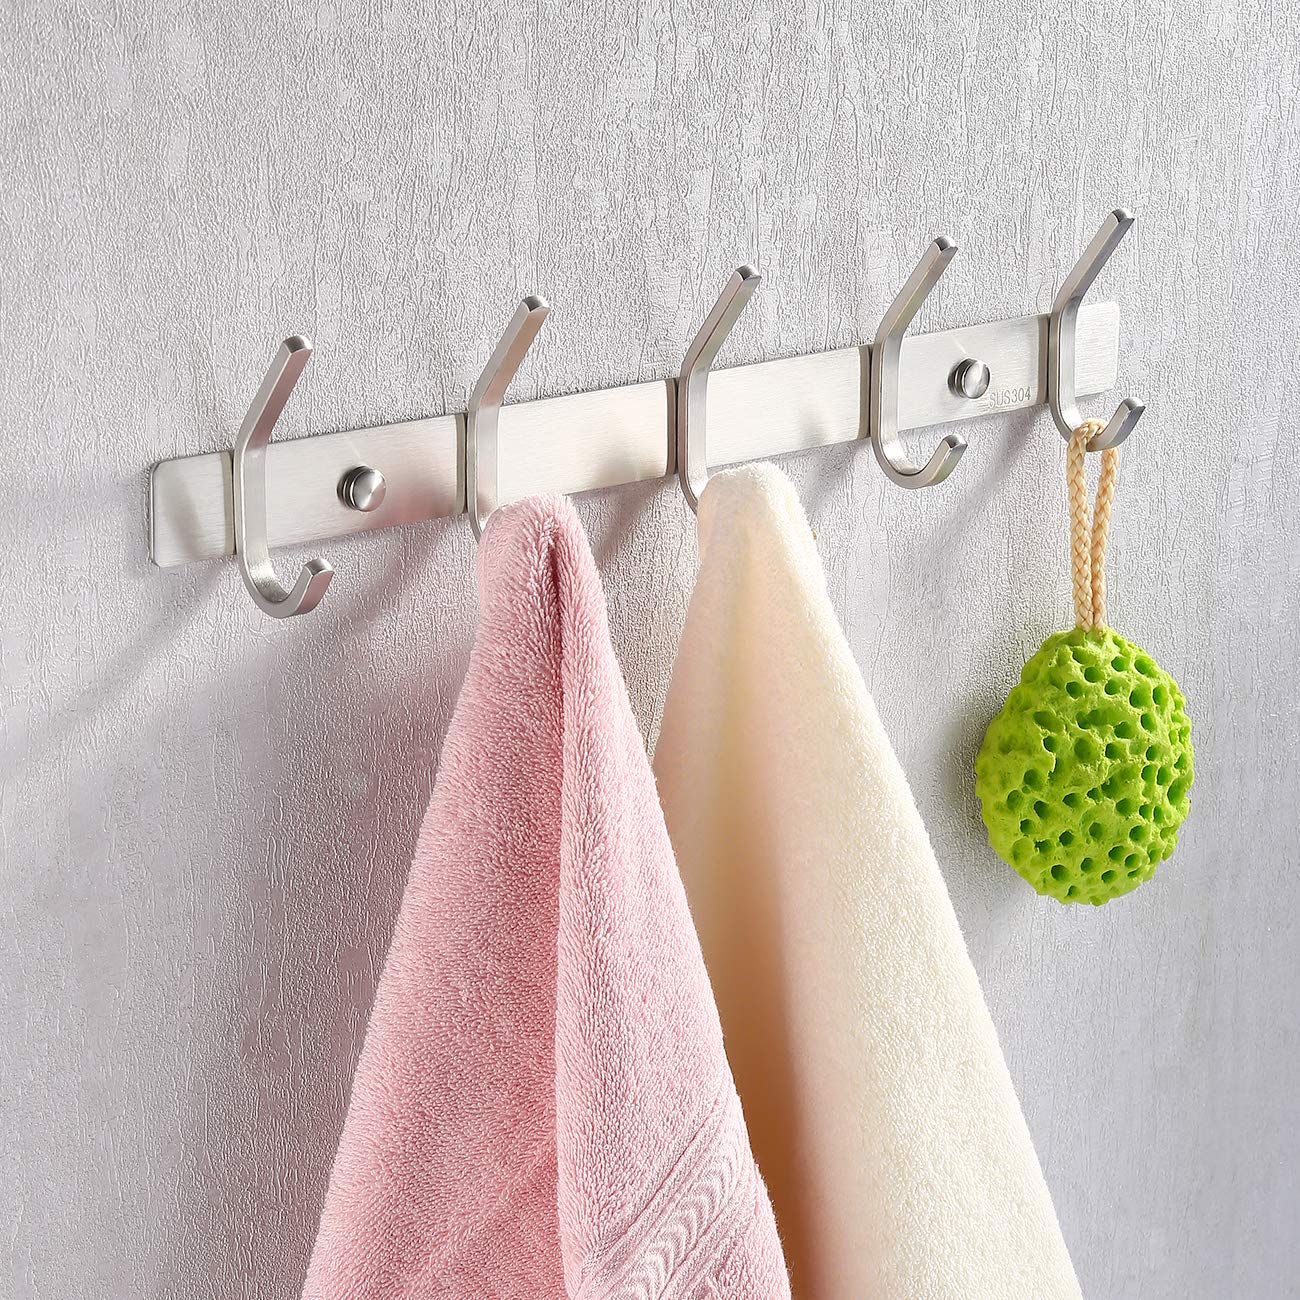 KES Bathroom Towel Rail Rack with 5 Scroll Hooks Wall Mount